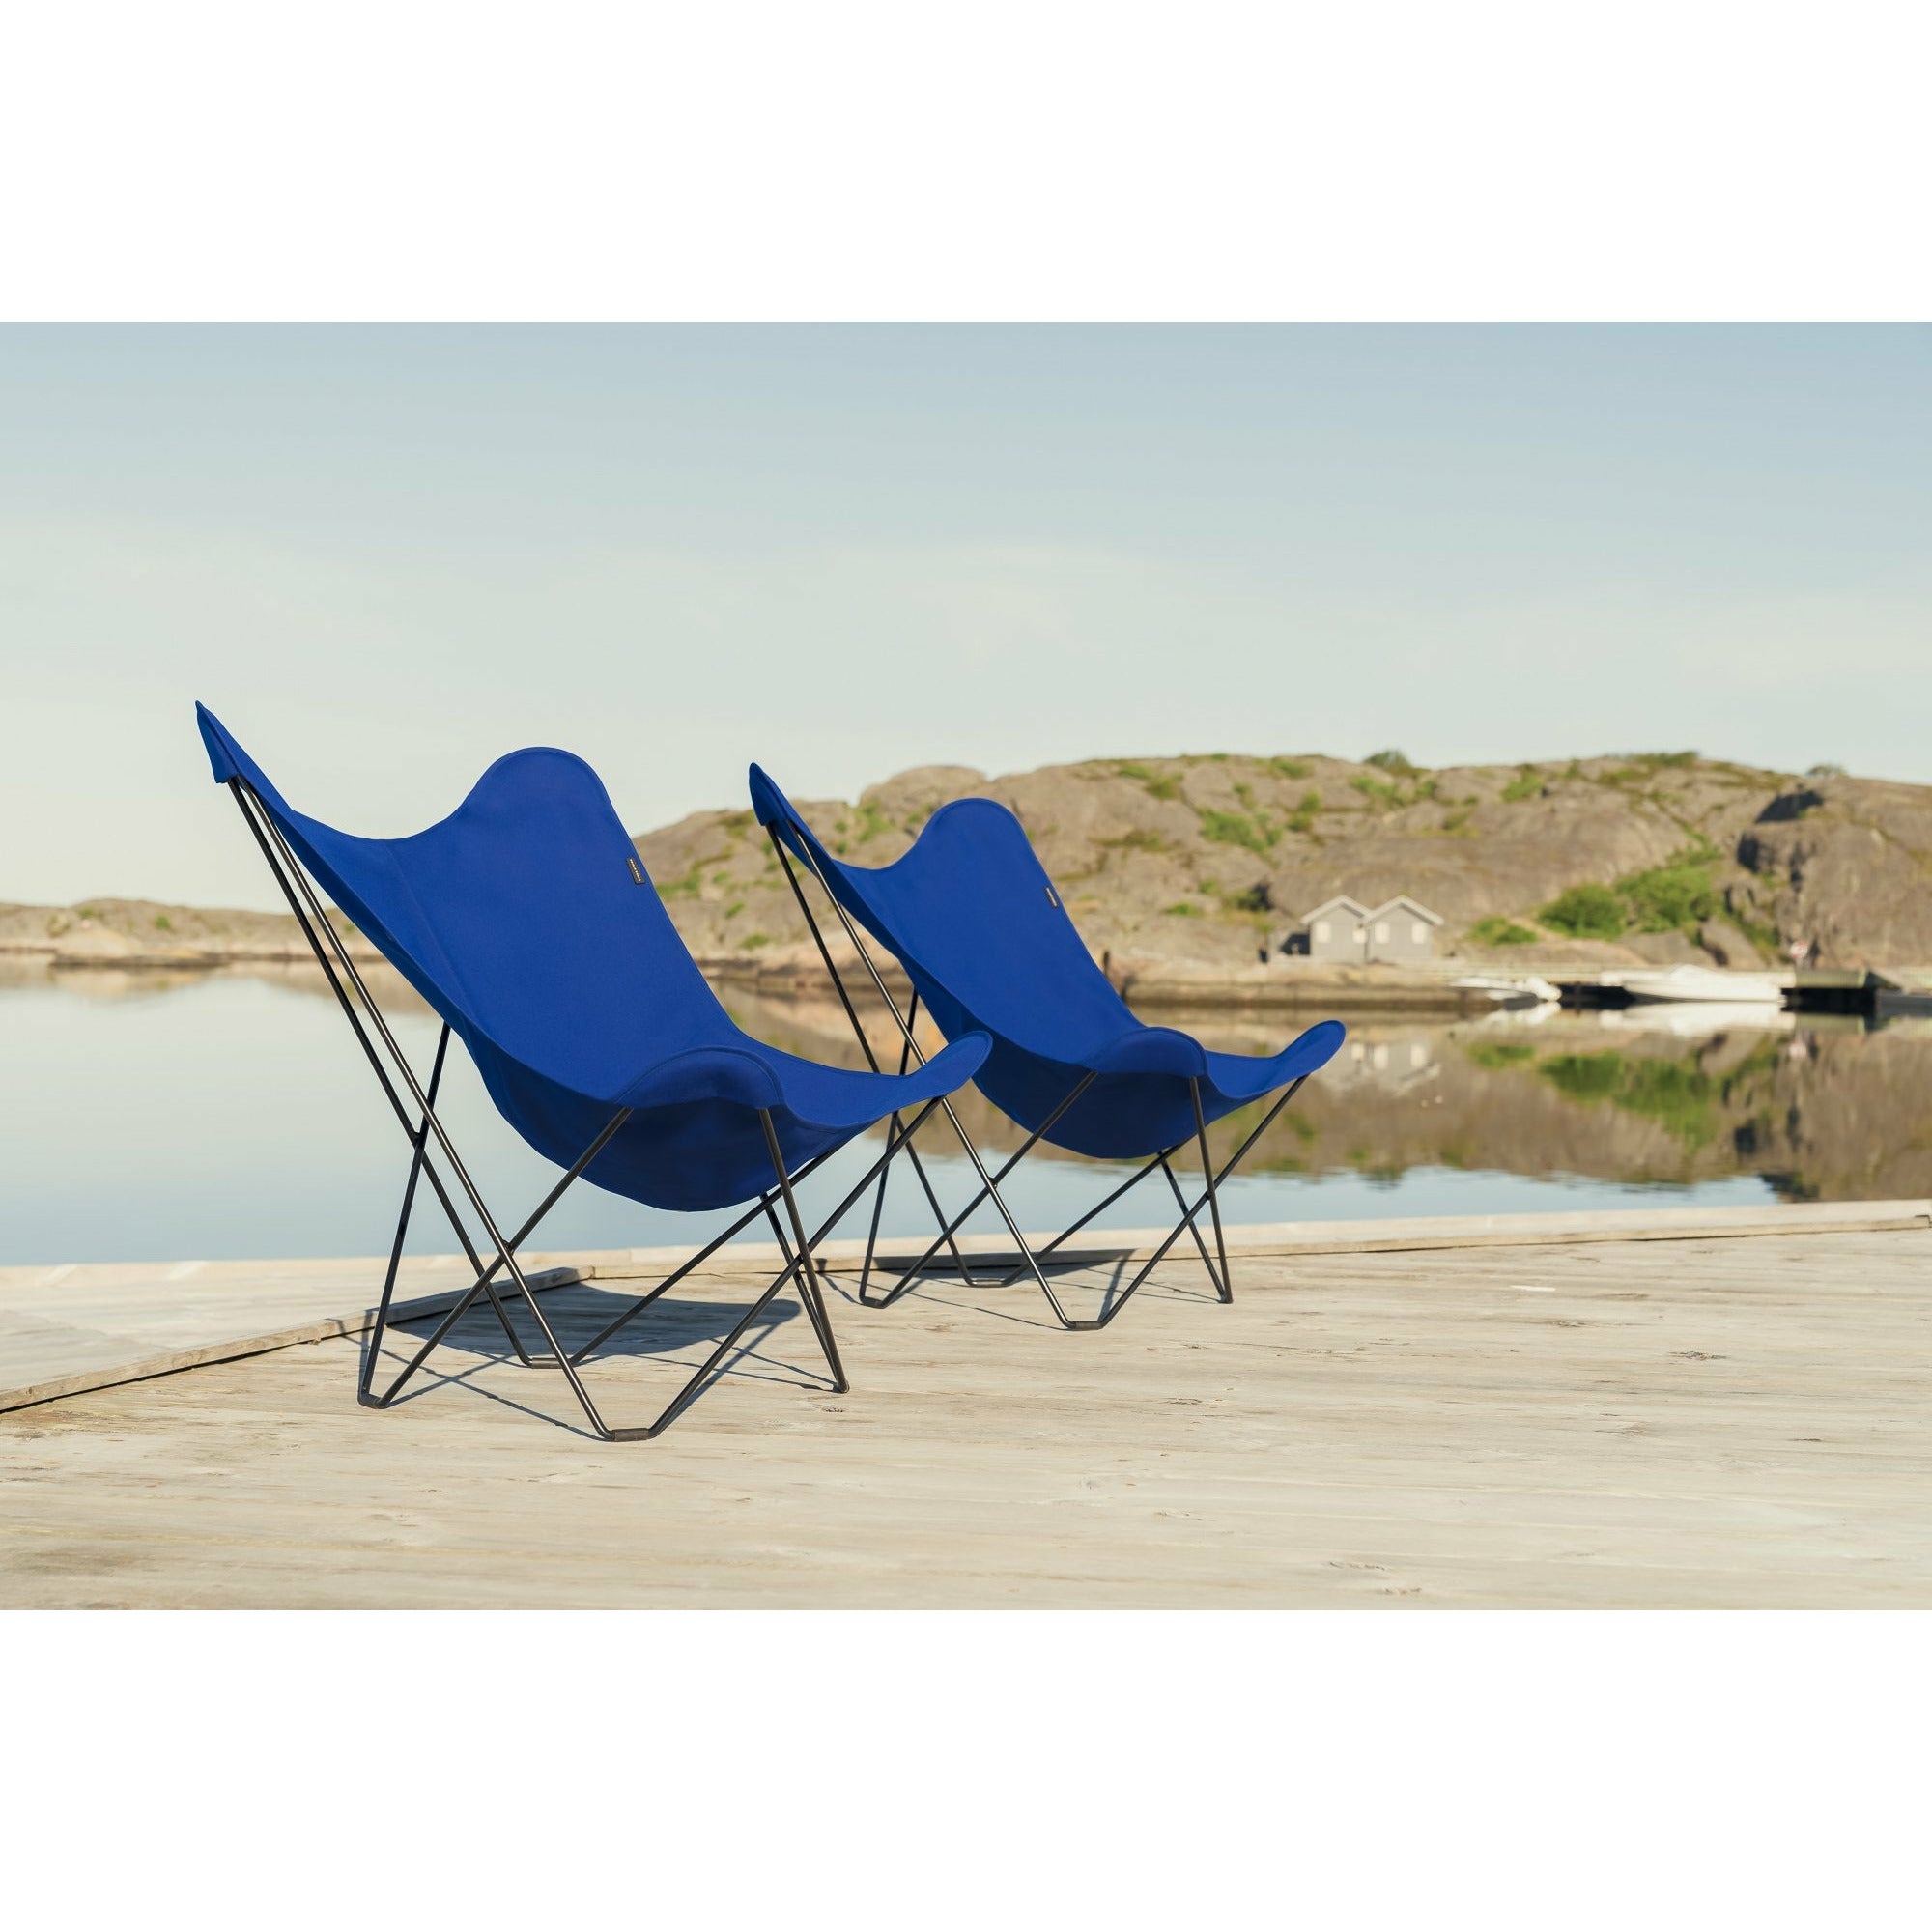 Cuero Sunshine Mariposa Butterfly Chair, Atlantic Blue/Black Galvanized